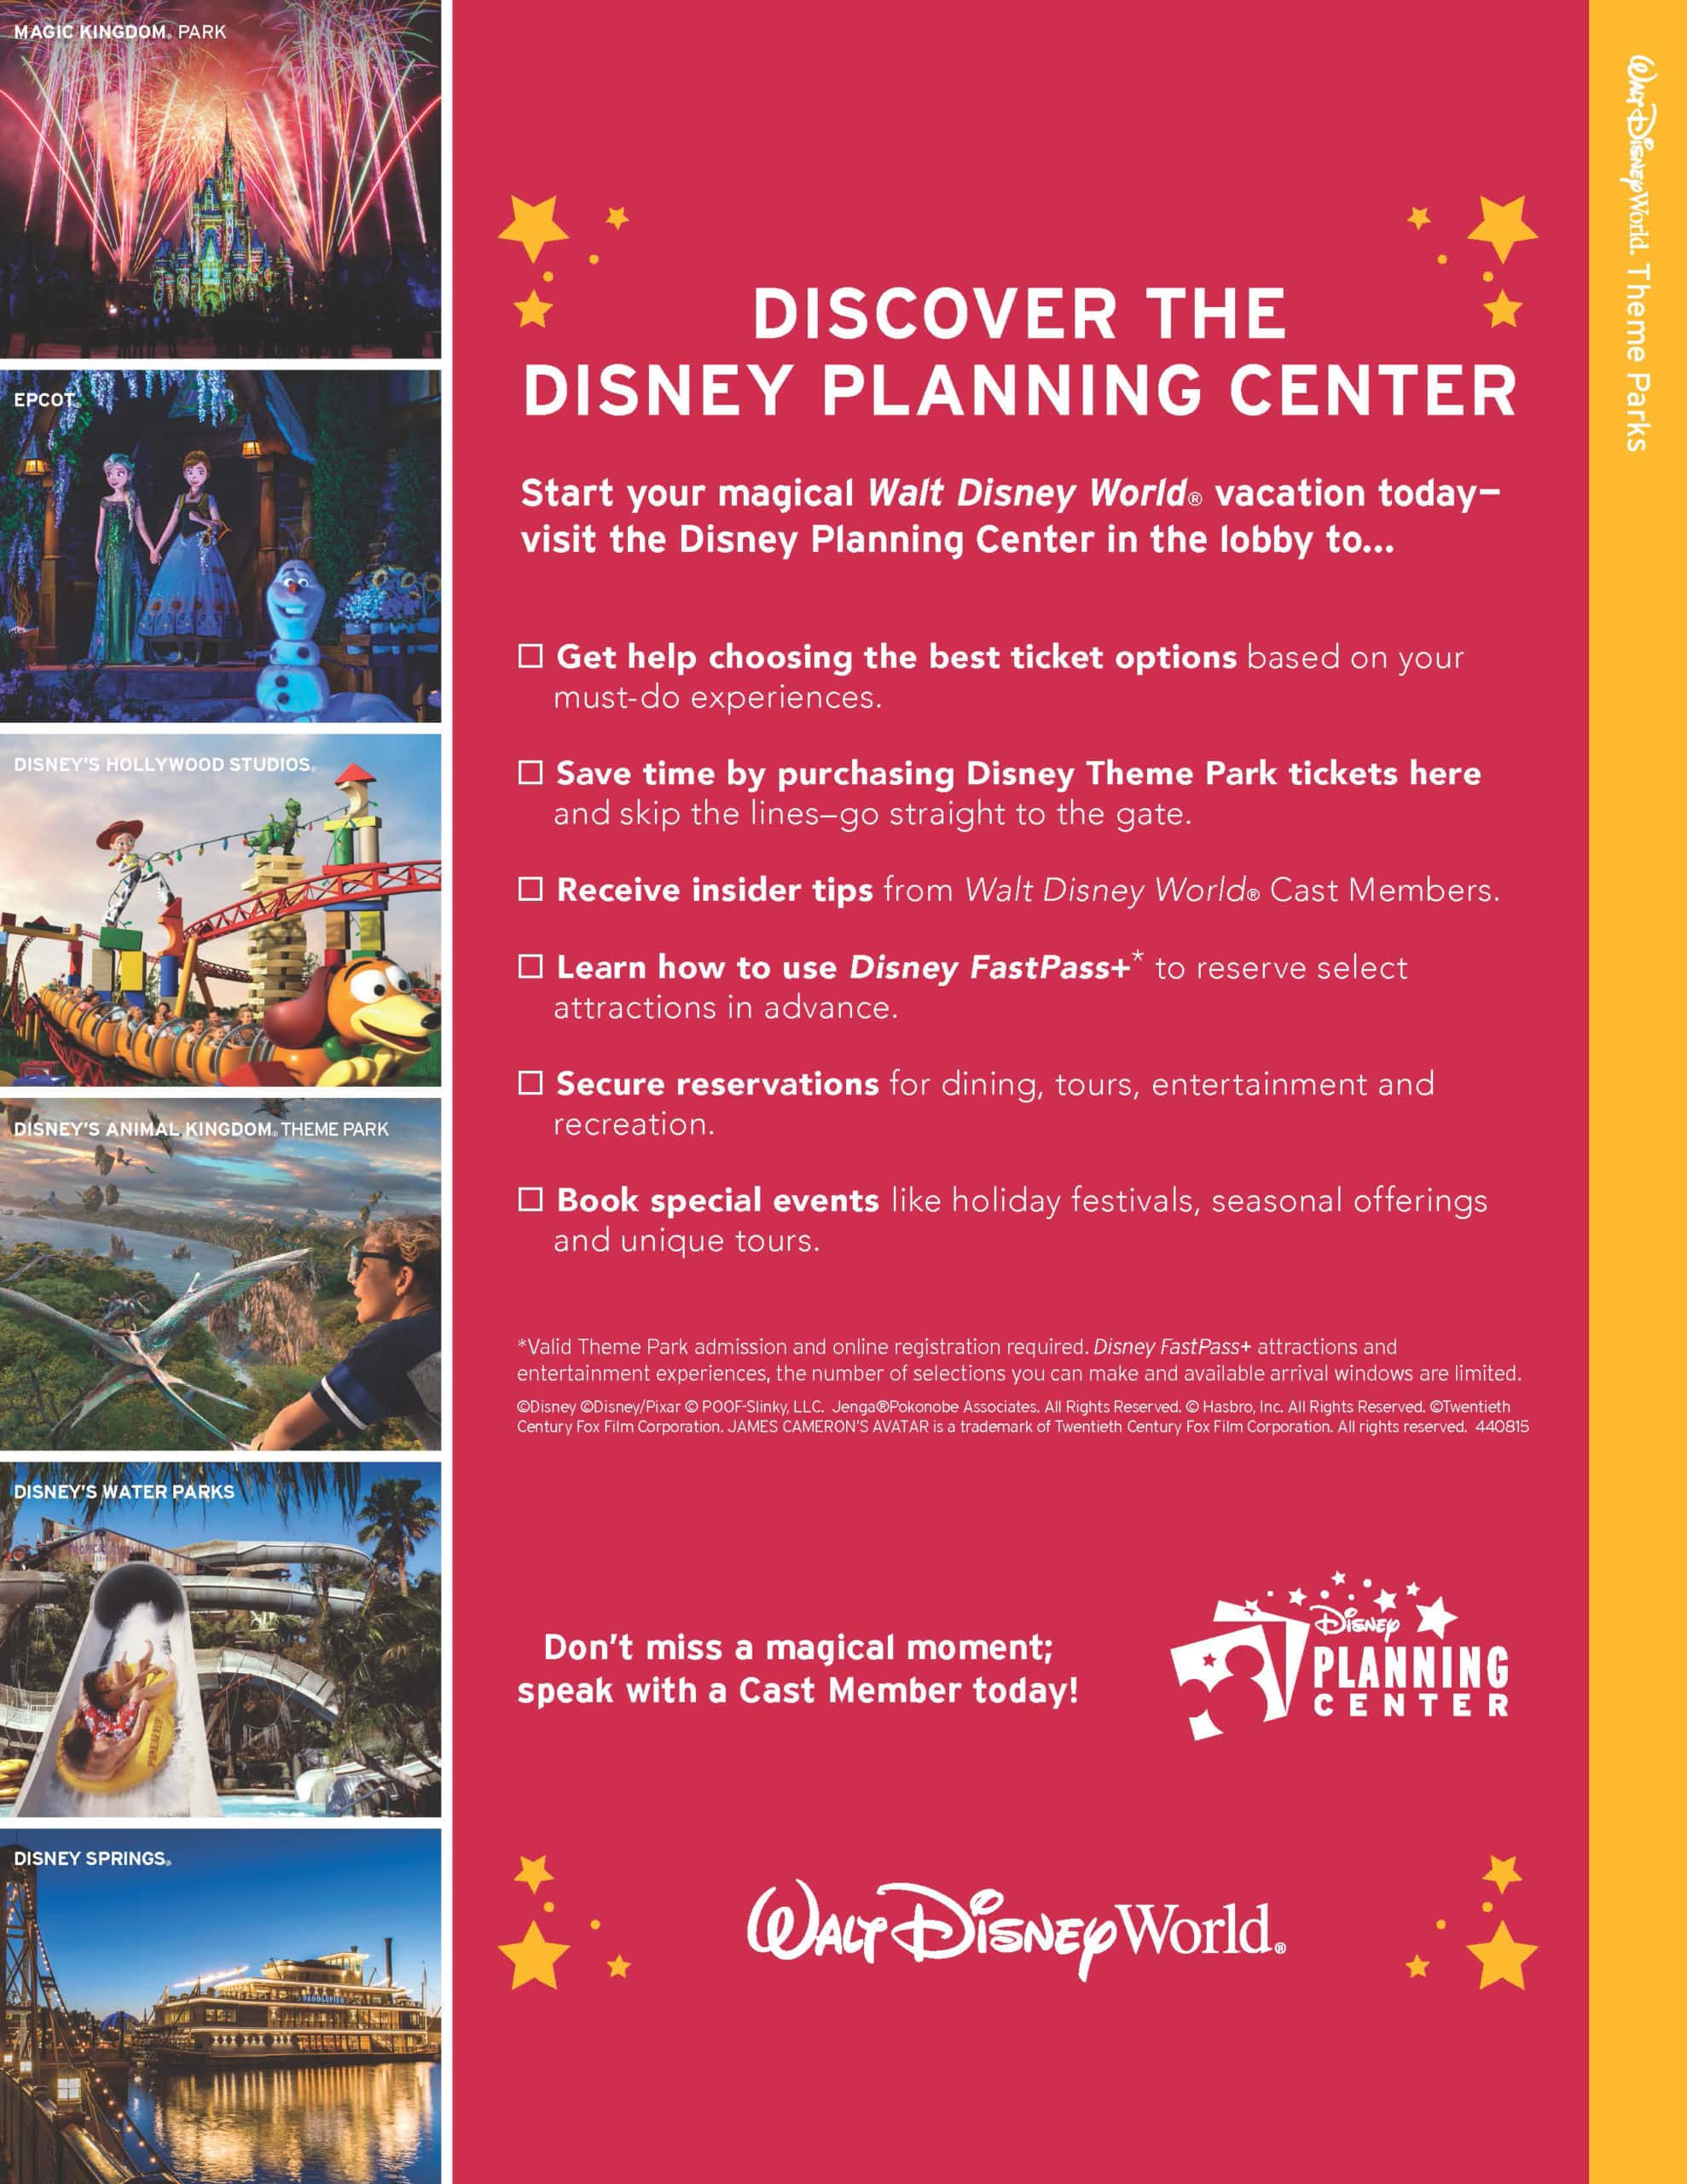 Disney planning center